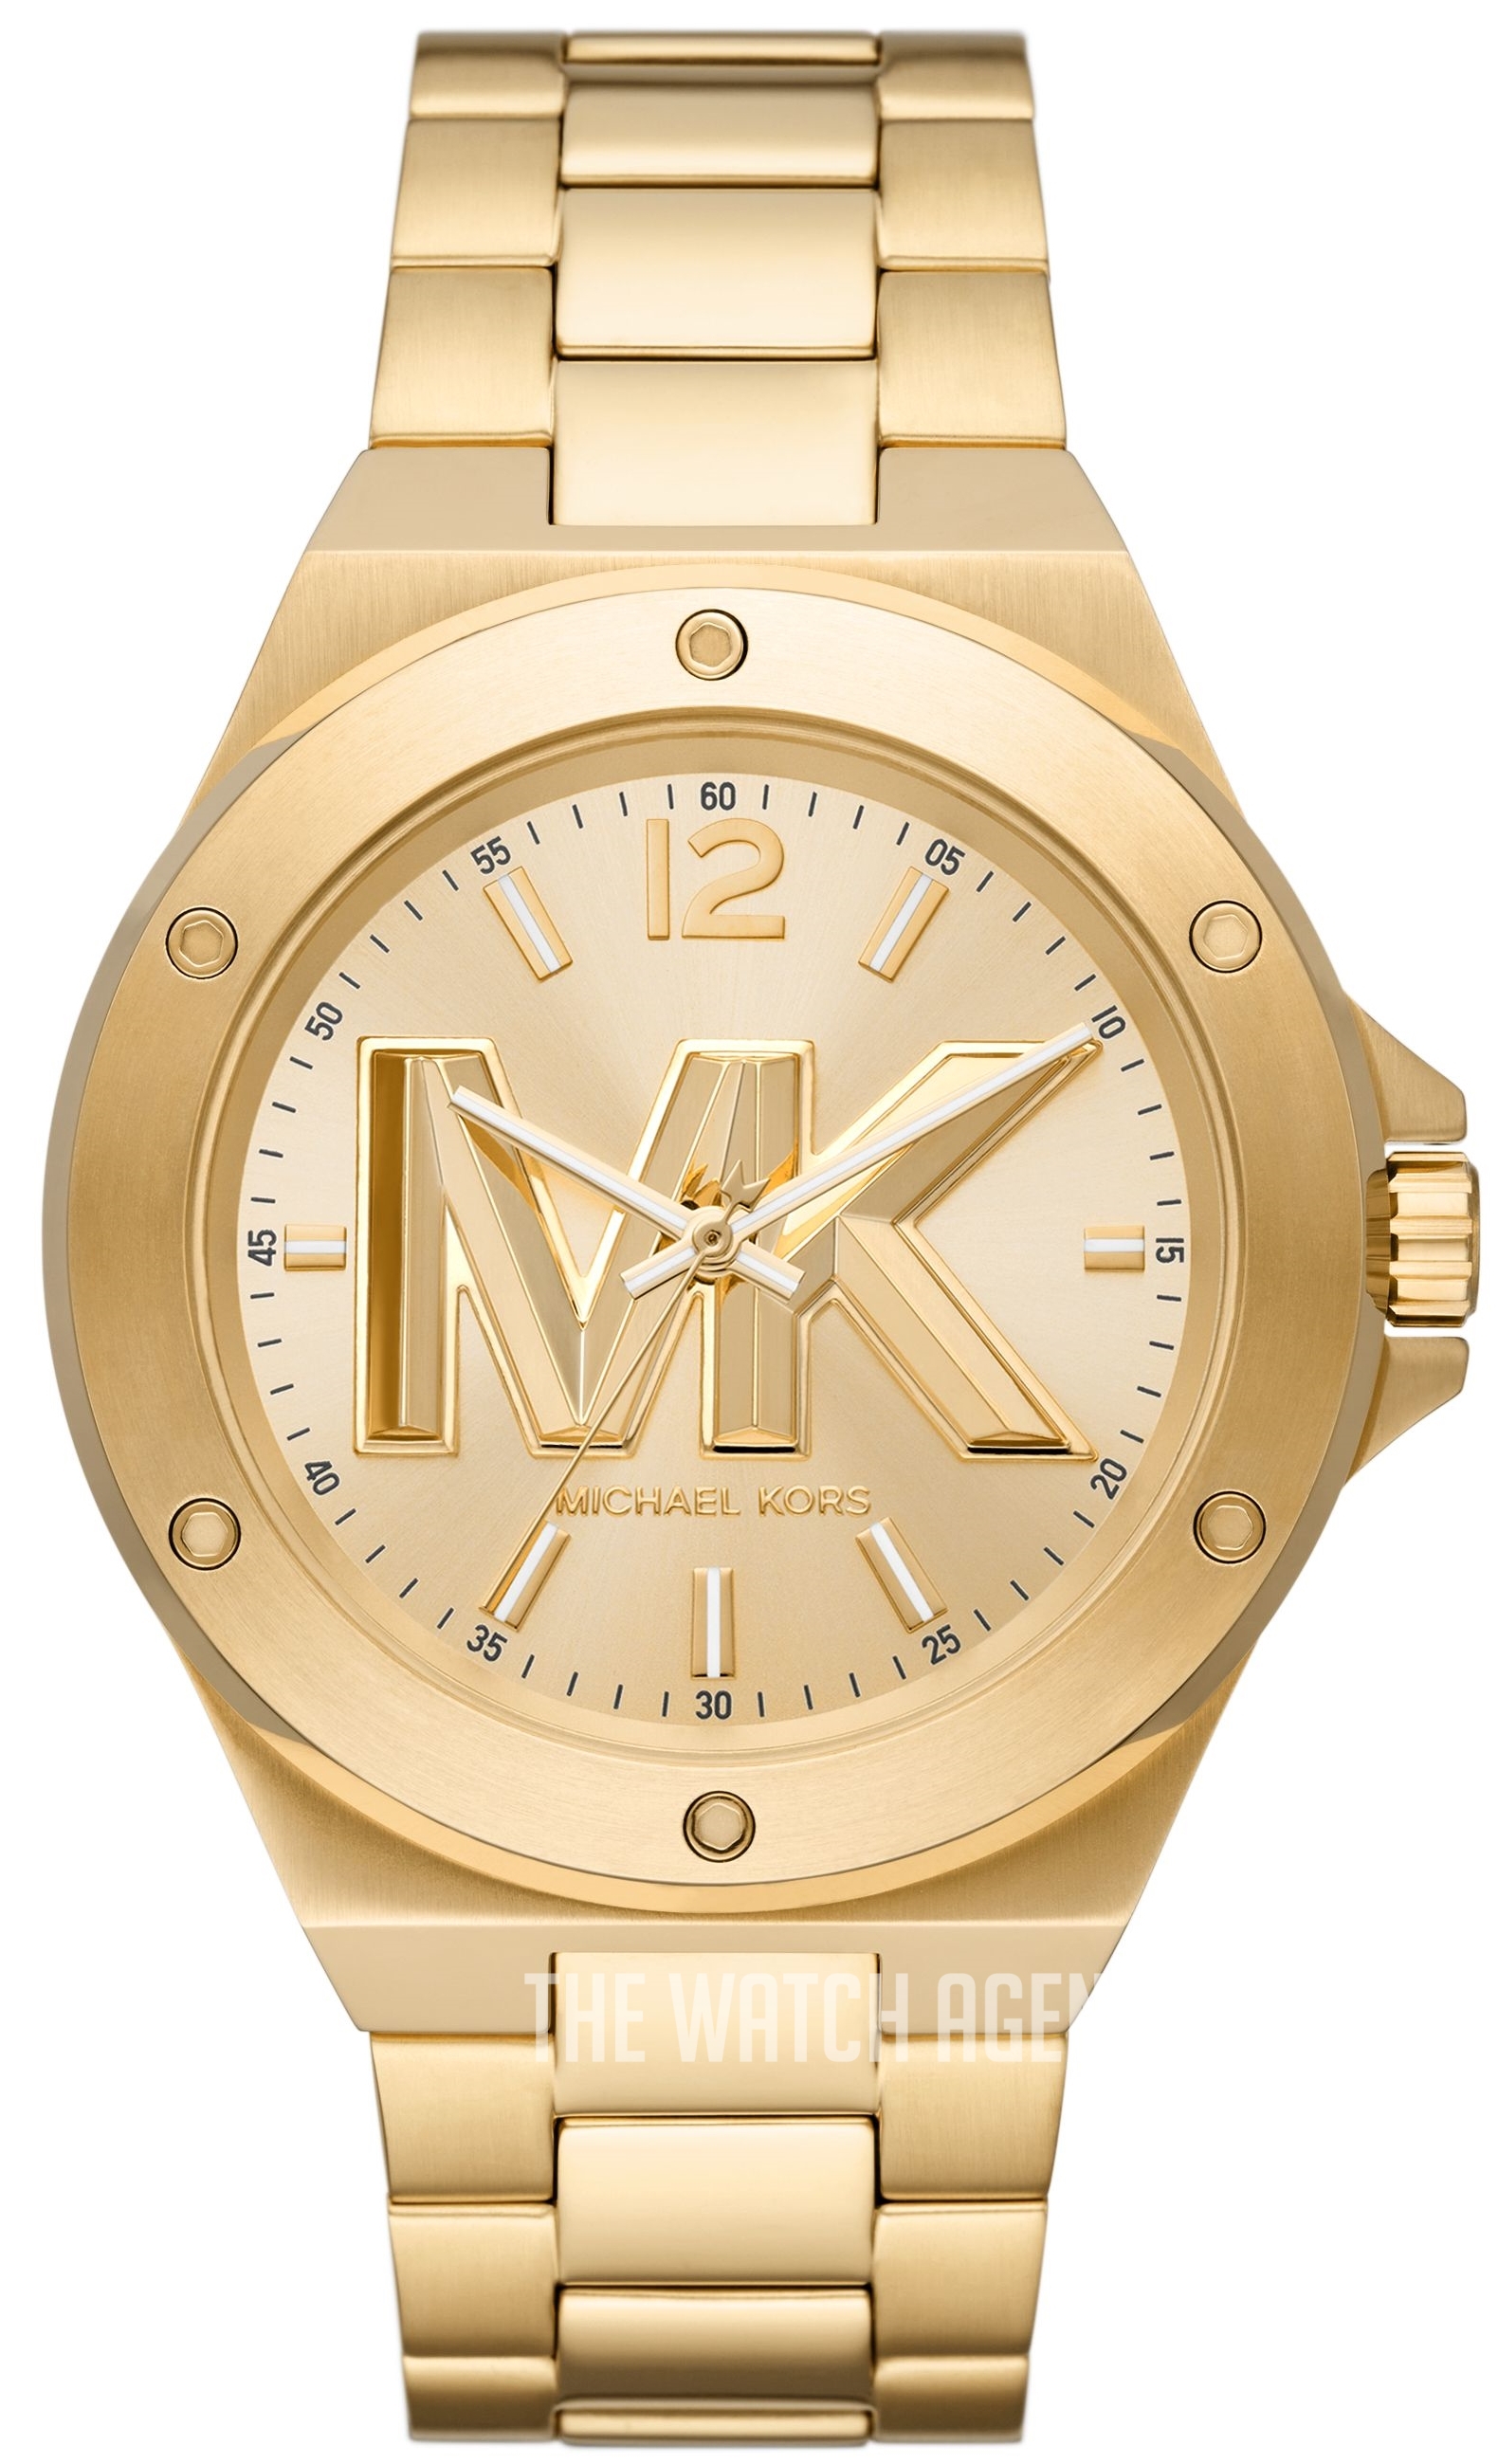 MK8939 Michael Kors Lennox | TheWatchAgency™